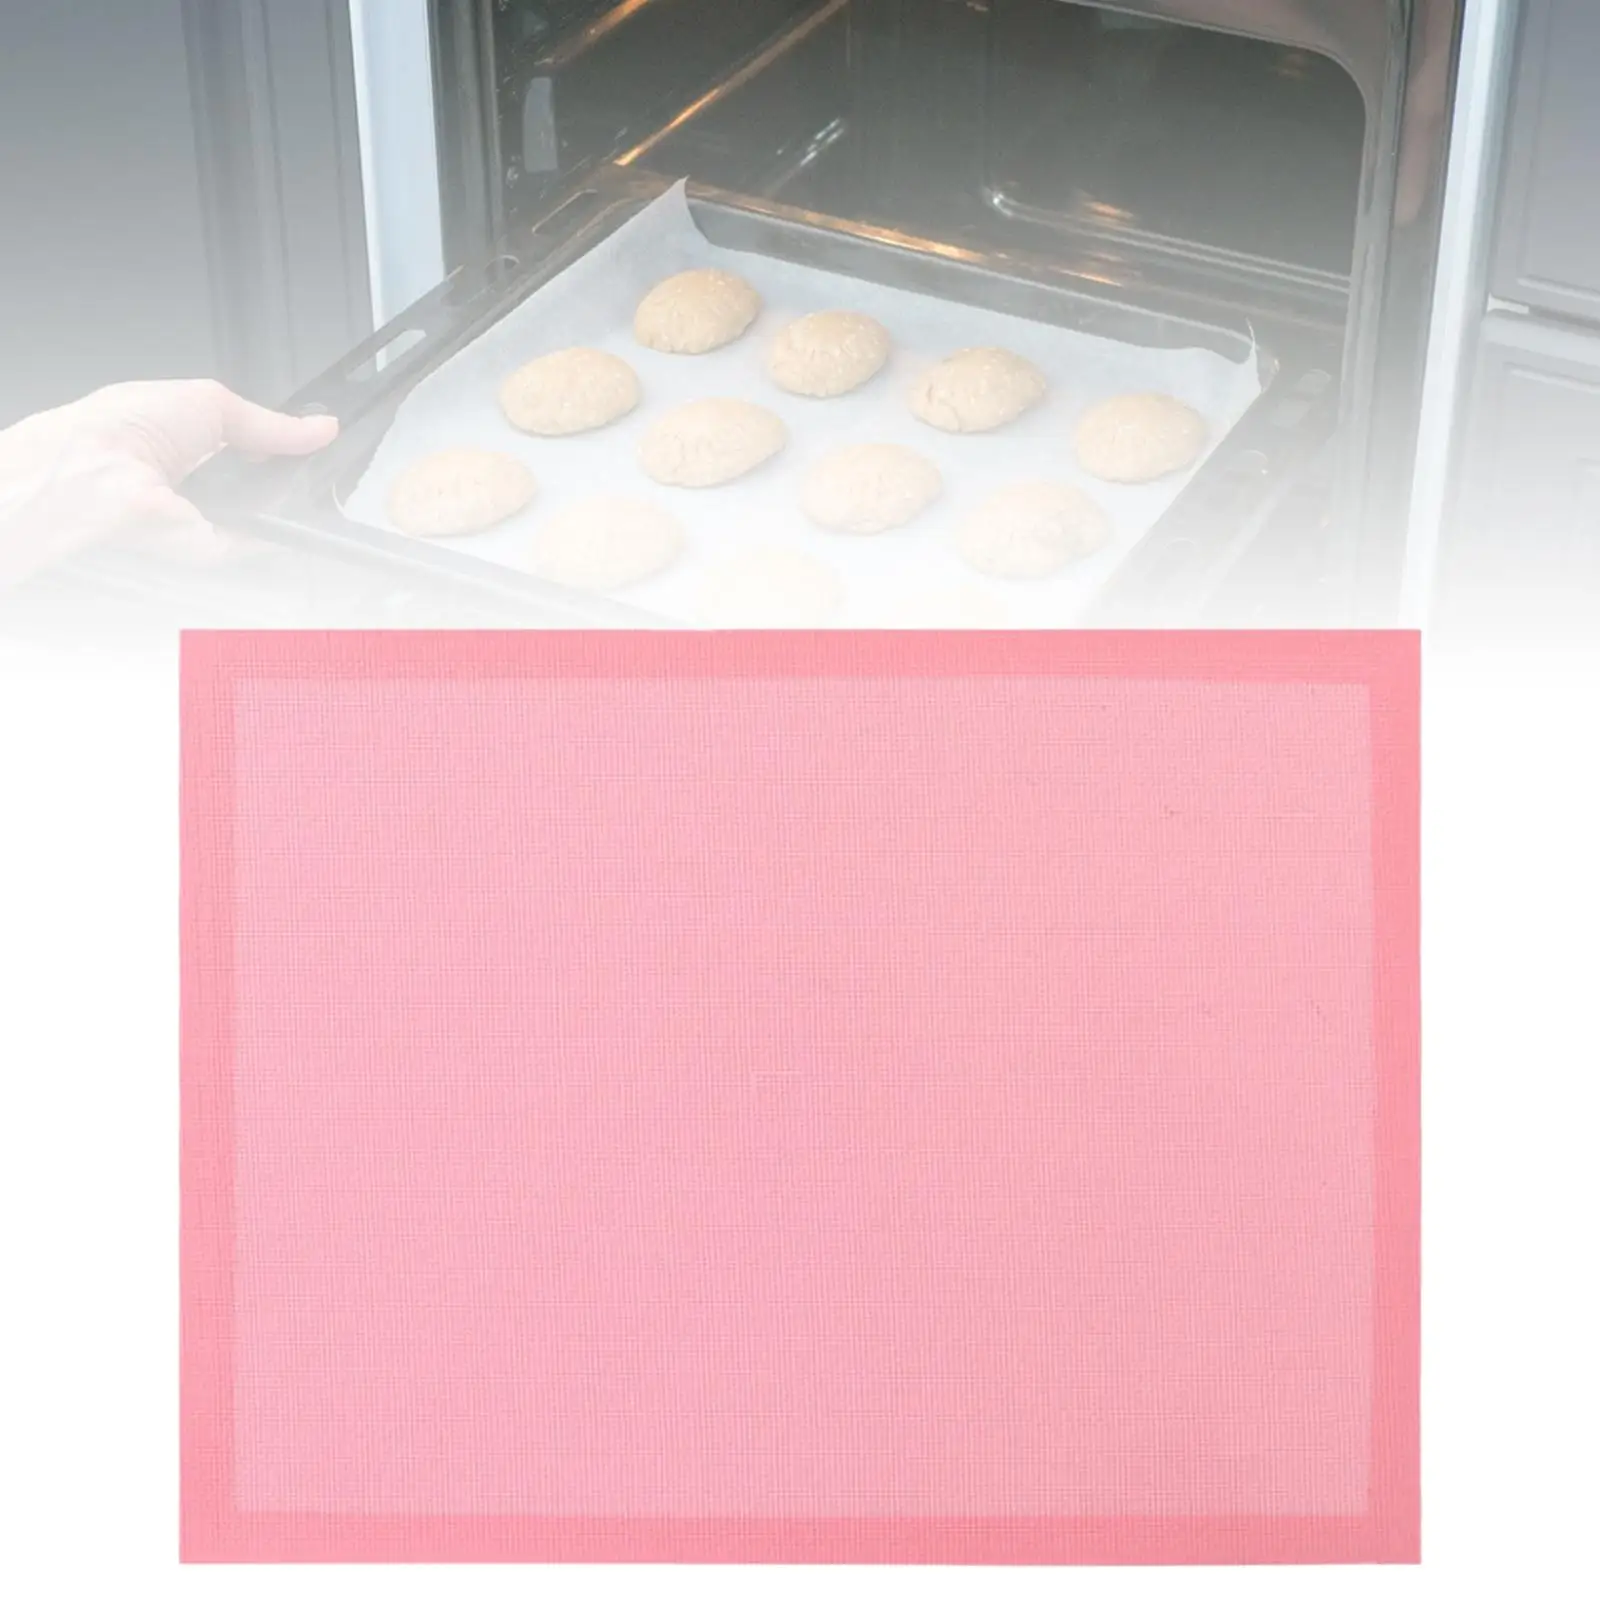 Silicone Baking Mat Reusable Cake Pan Mat Baking Supplies Bakeware Mat Heat Resistant Oven Liner Baking Sheet for Home Kitchen